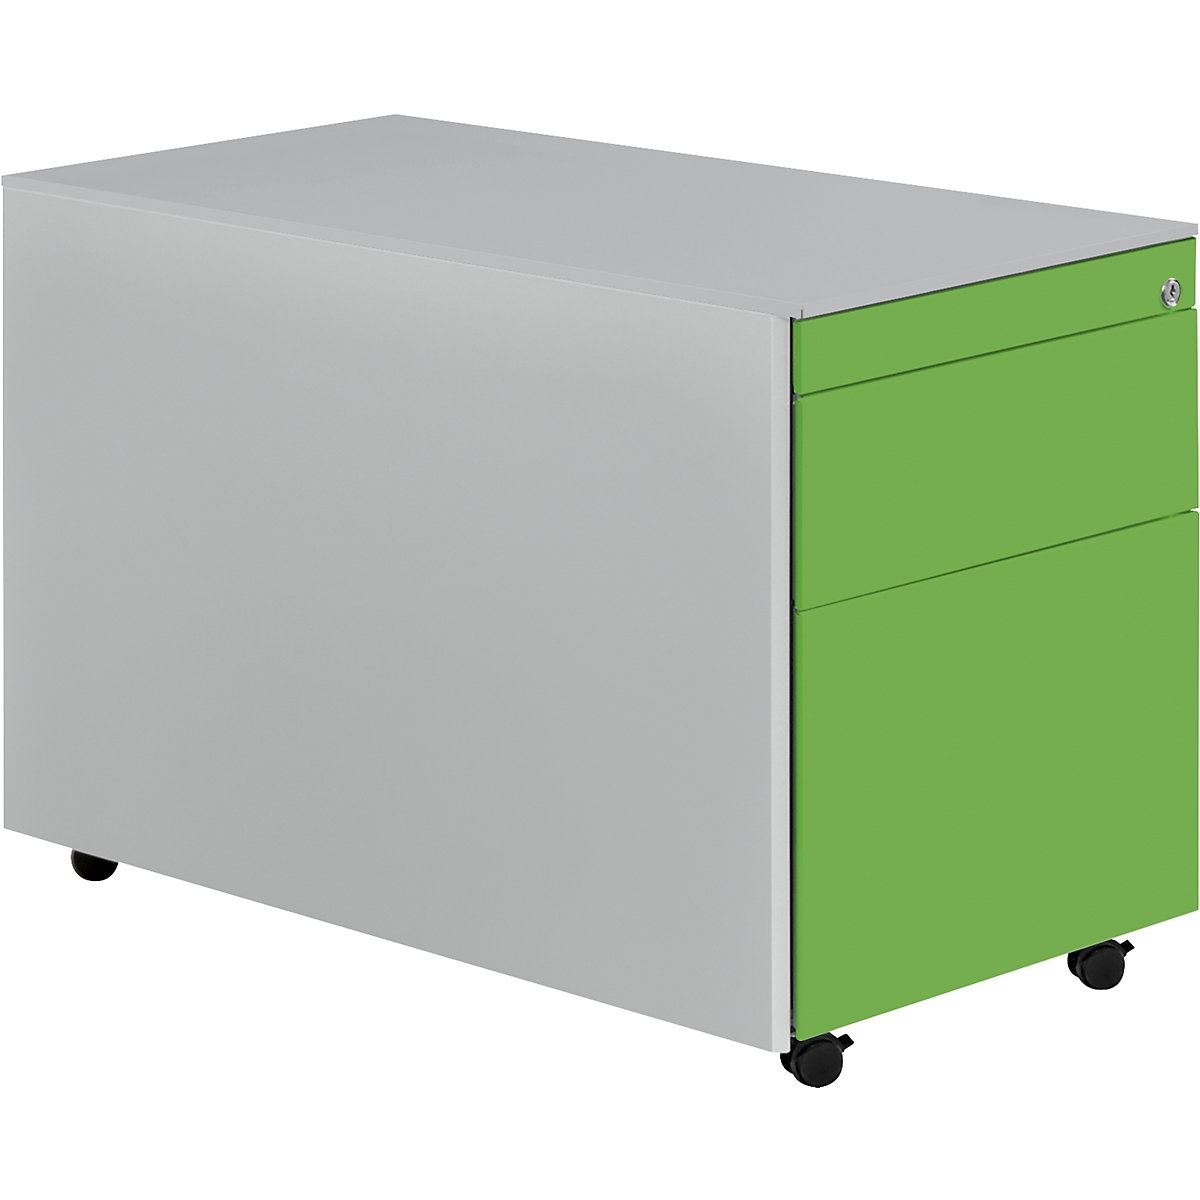 Zásuvkový kontejner s koly – mauser, v x h 570 x 800 mm, 1 zásuvka na materiál, 1 kartotéka pro závěsné složky, bílý hliník / zelenožlutá / bílý hliník-8